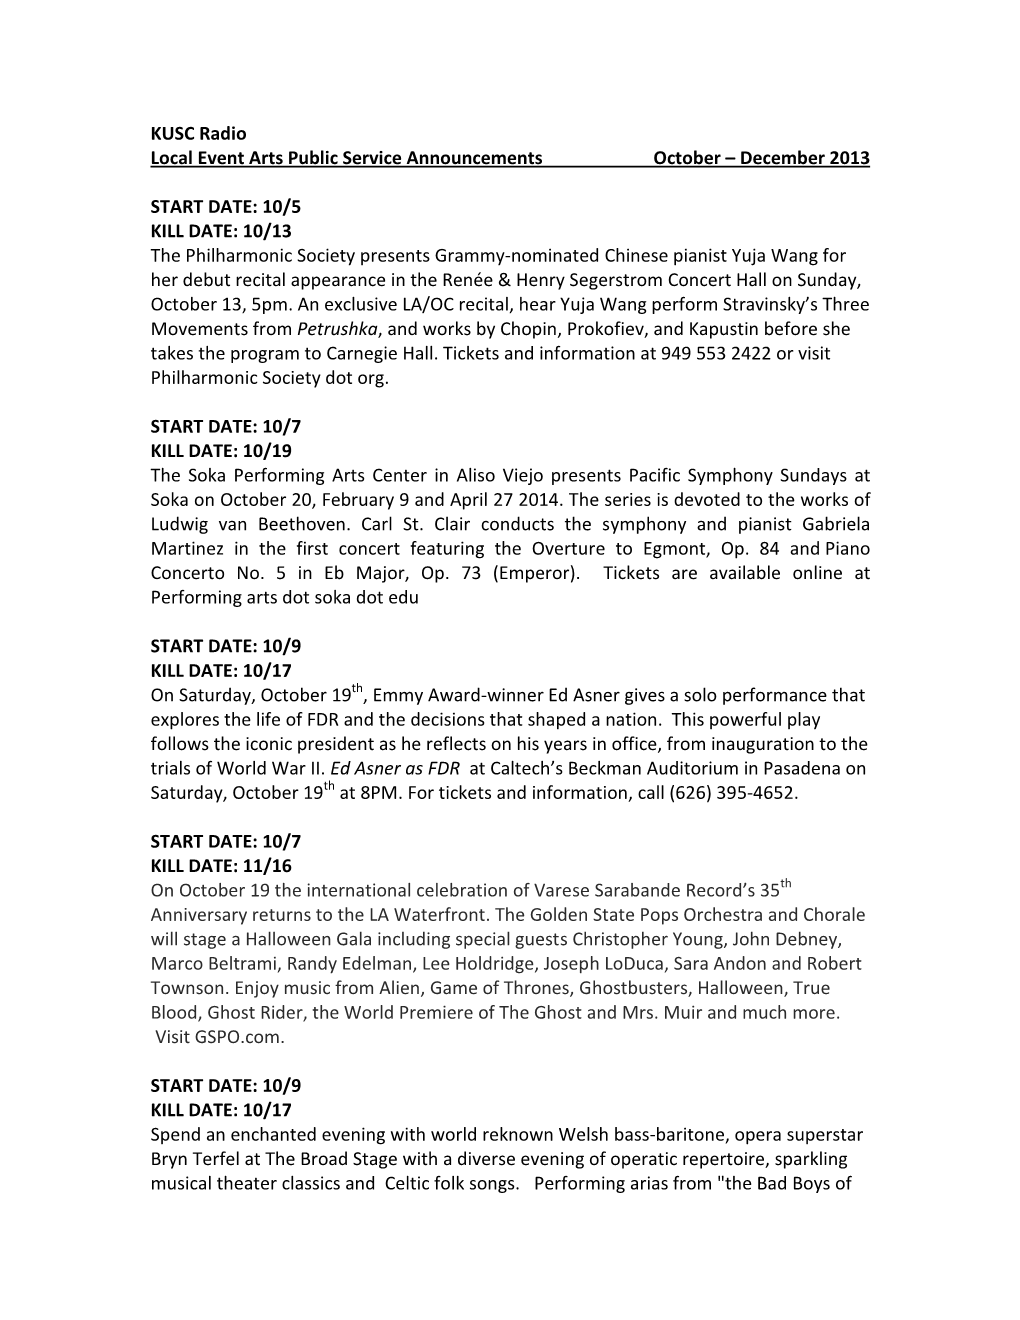 KUSC Radio Local Event Arts Public Service Announcements October – December 2013